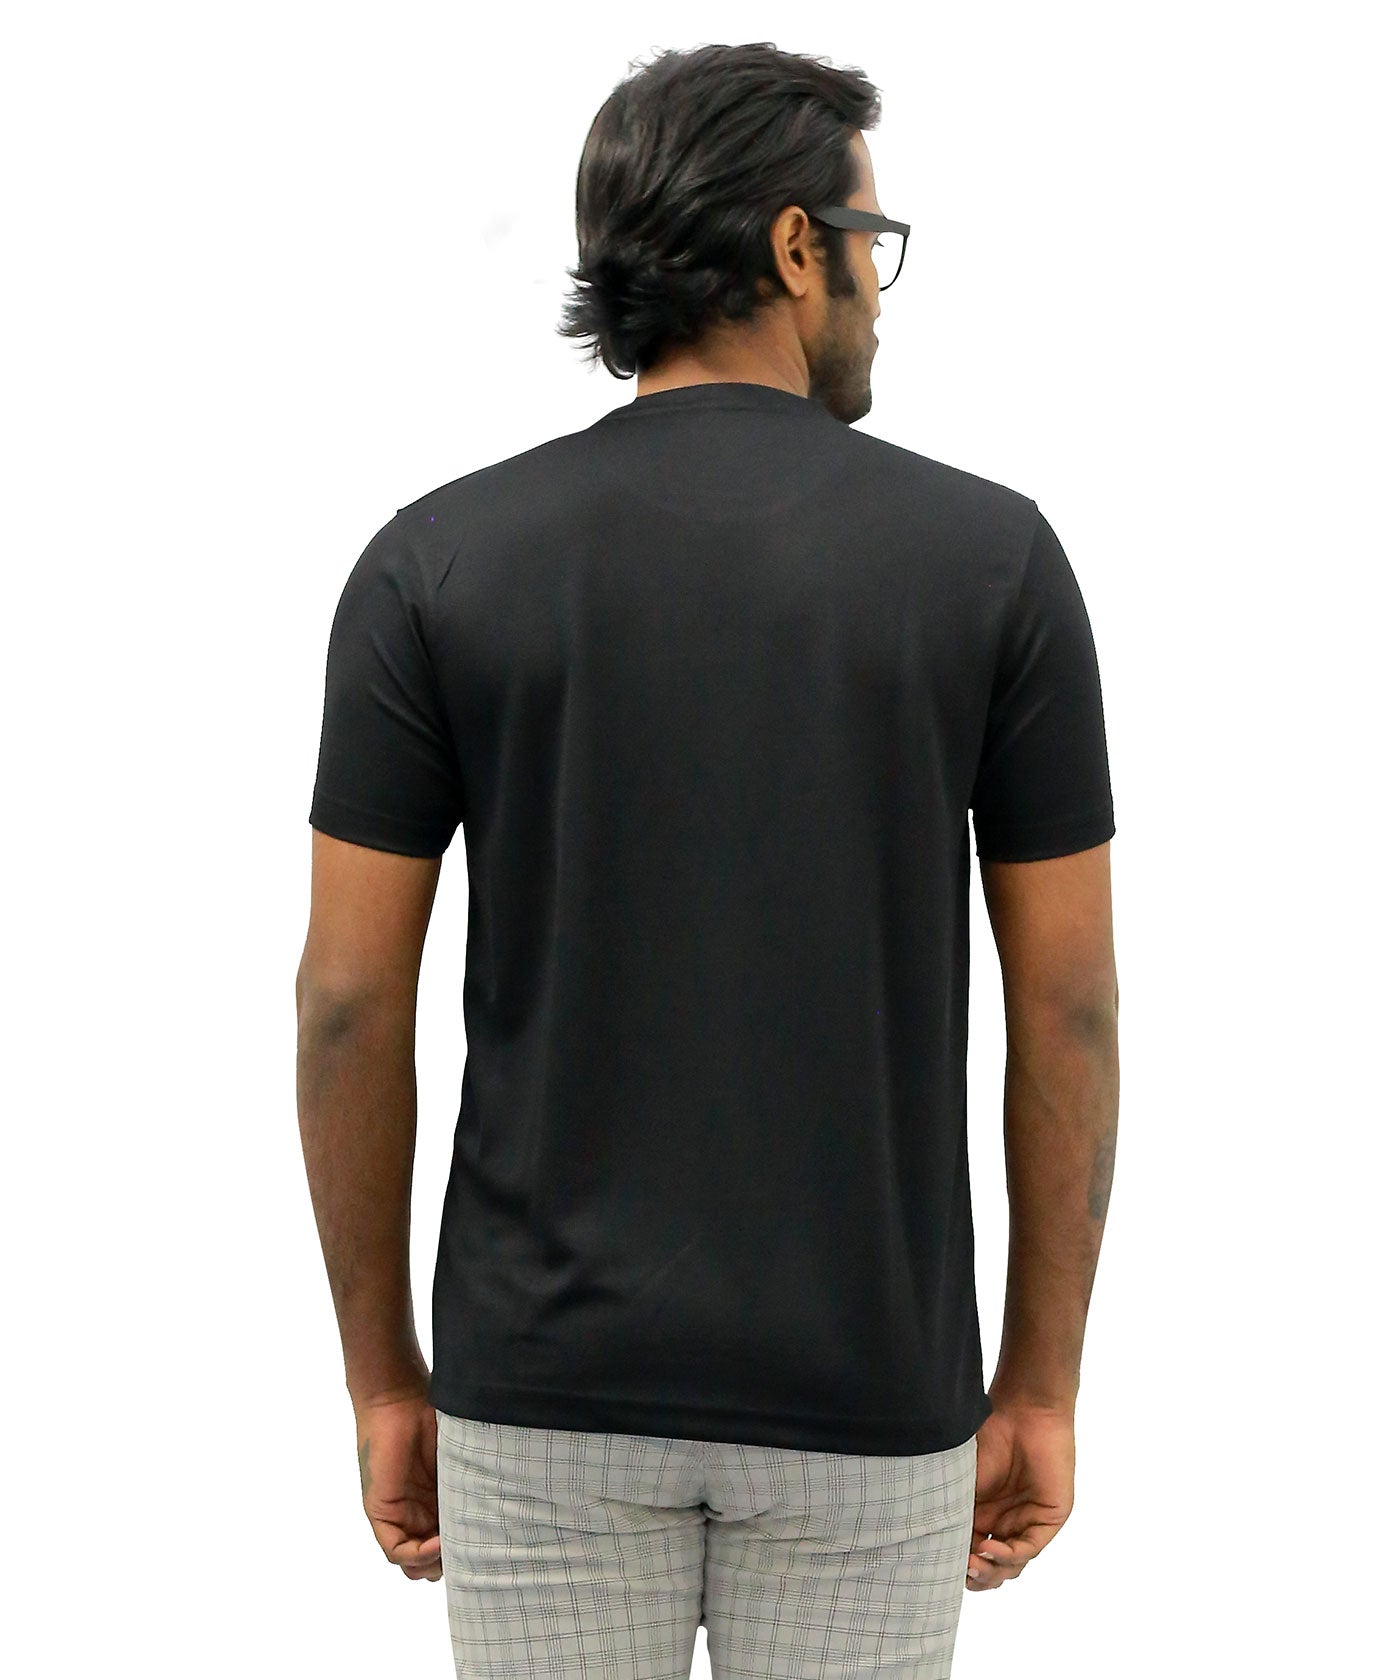 Om Art - Dryfit T-Shirt for Men - Black